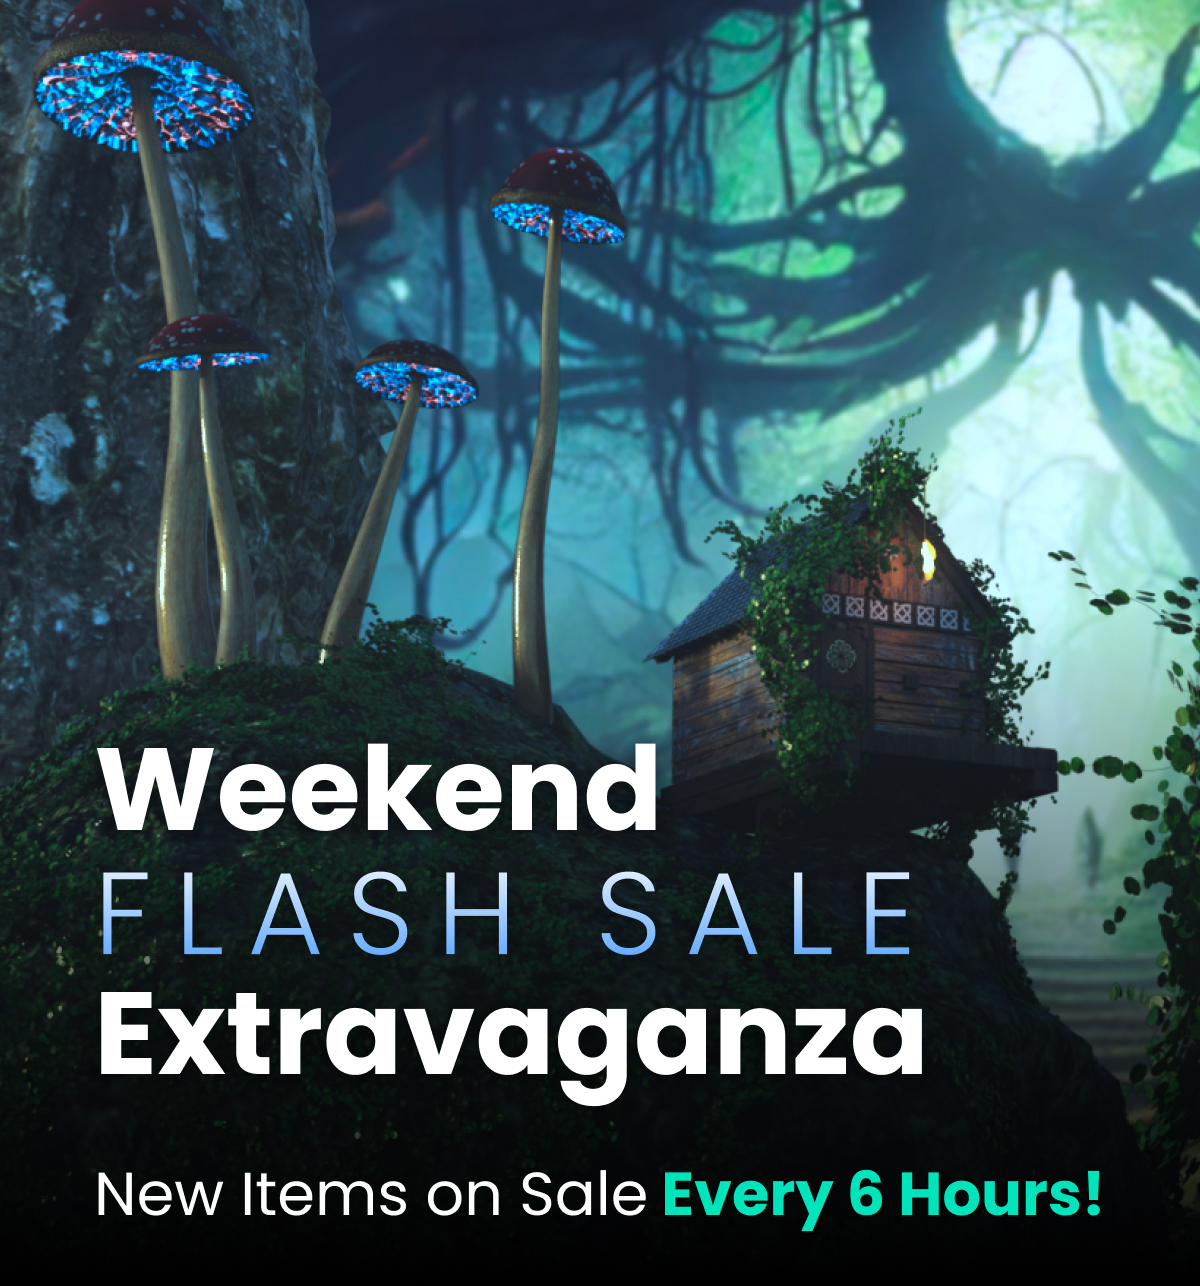 Weekend Flash Sale Extravaganza